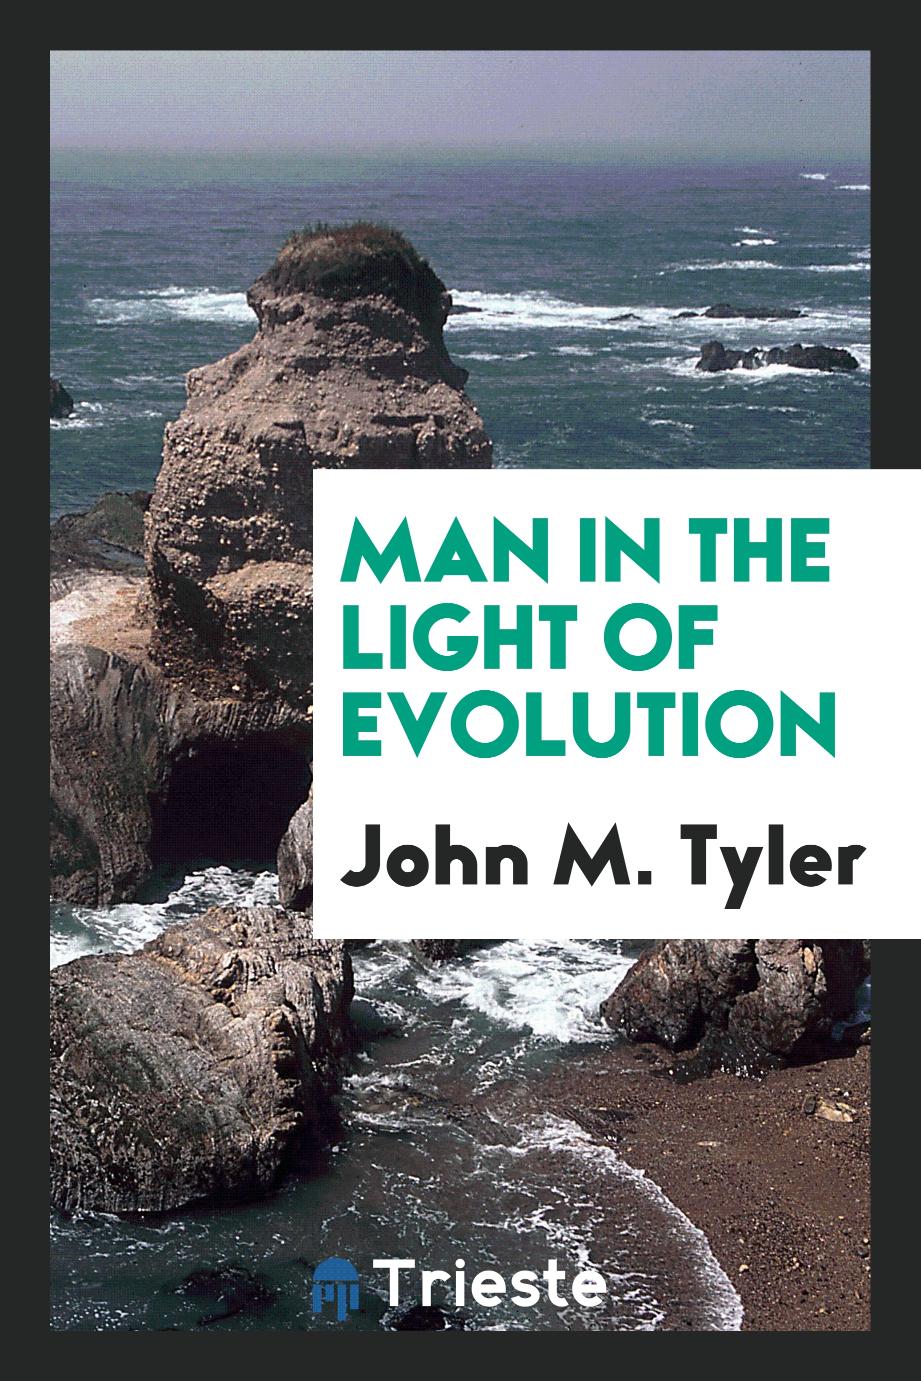 Man in the Light of Evolution